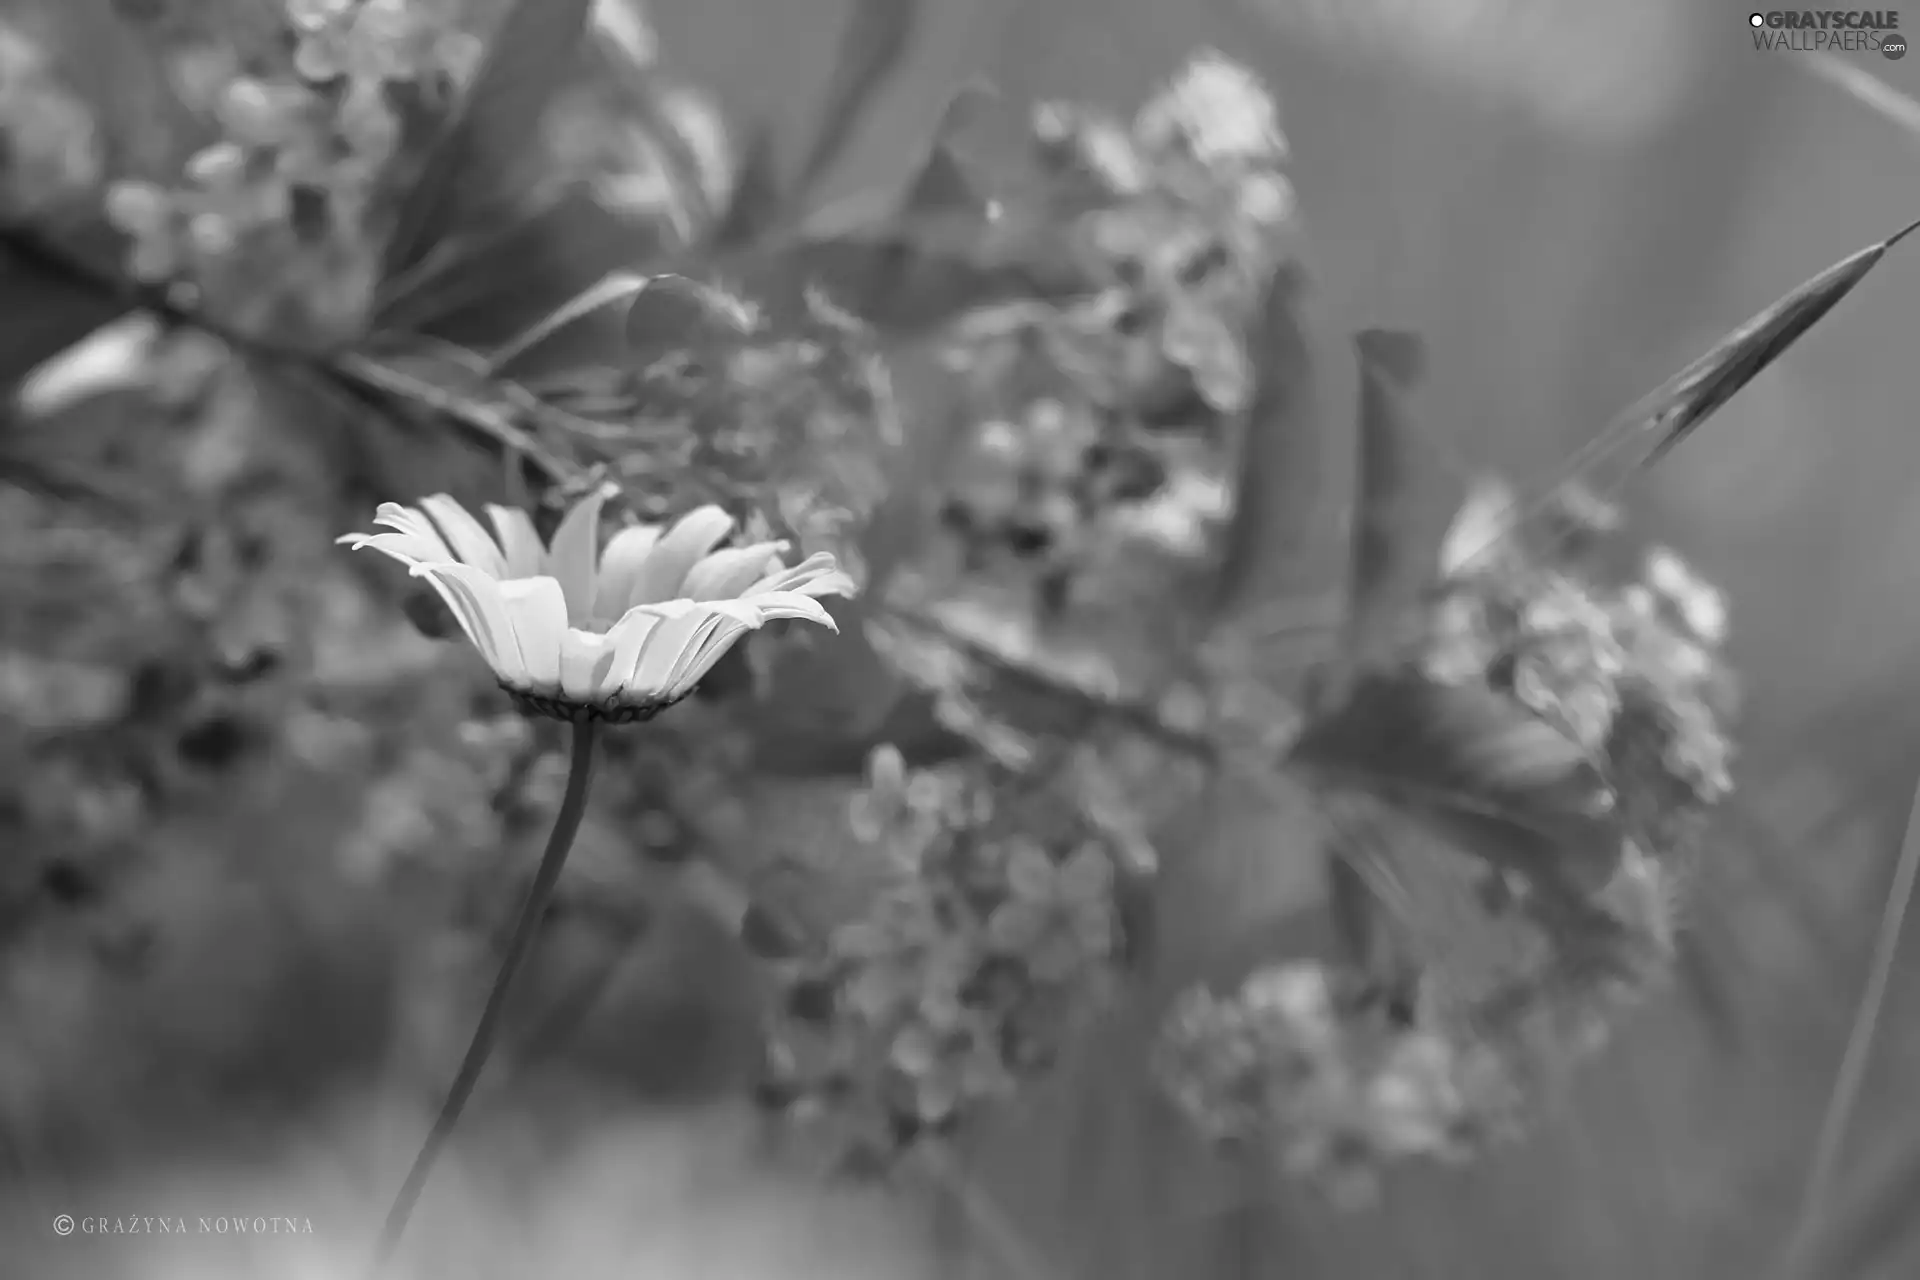 Colourfull Flowers, Daisy, White